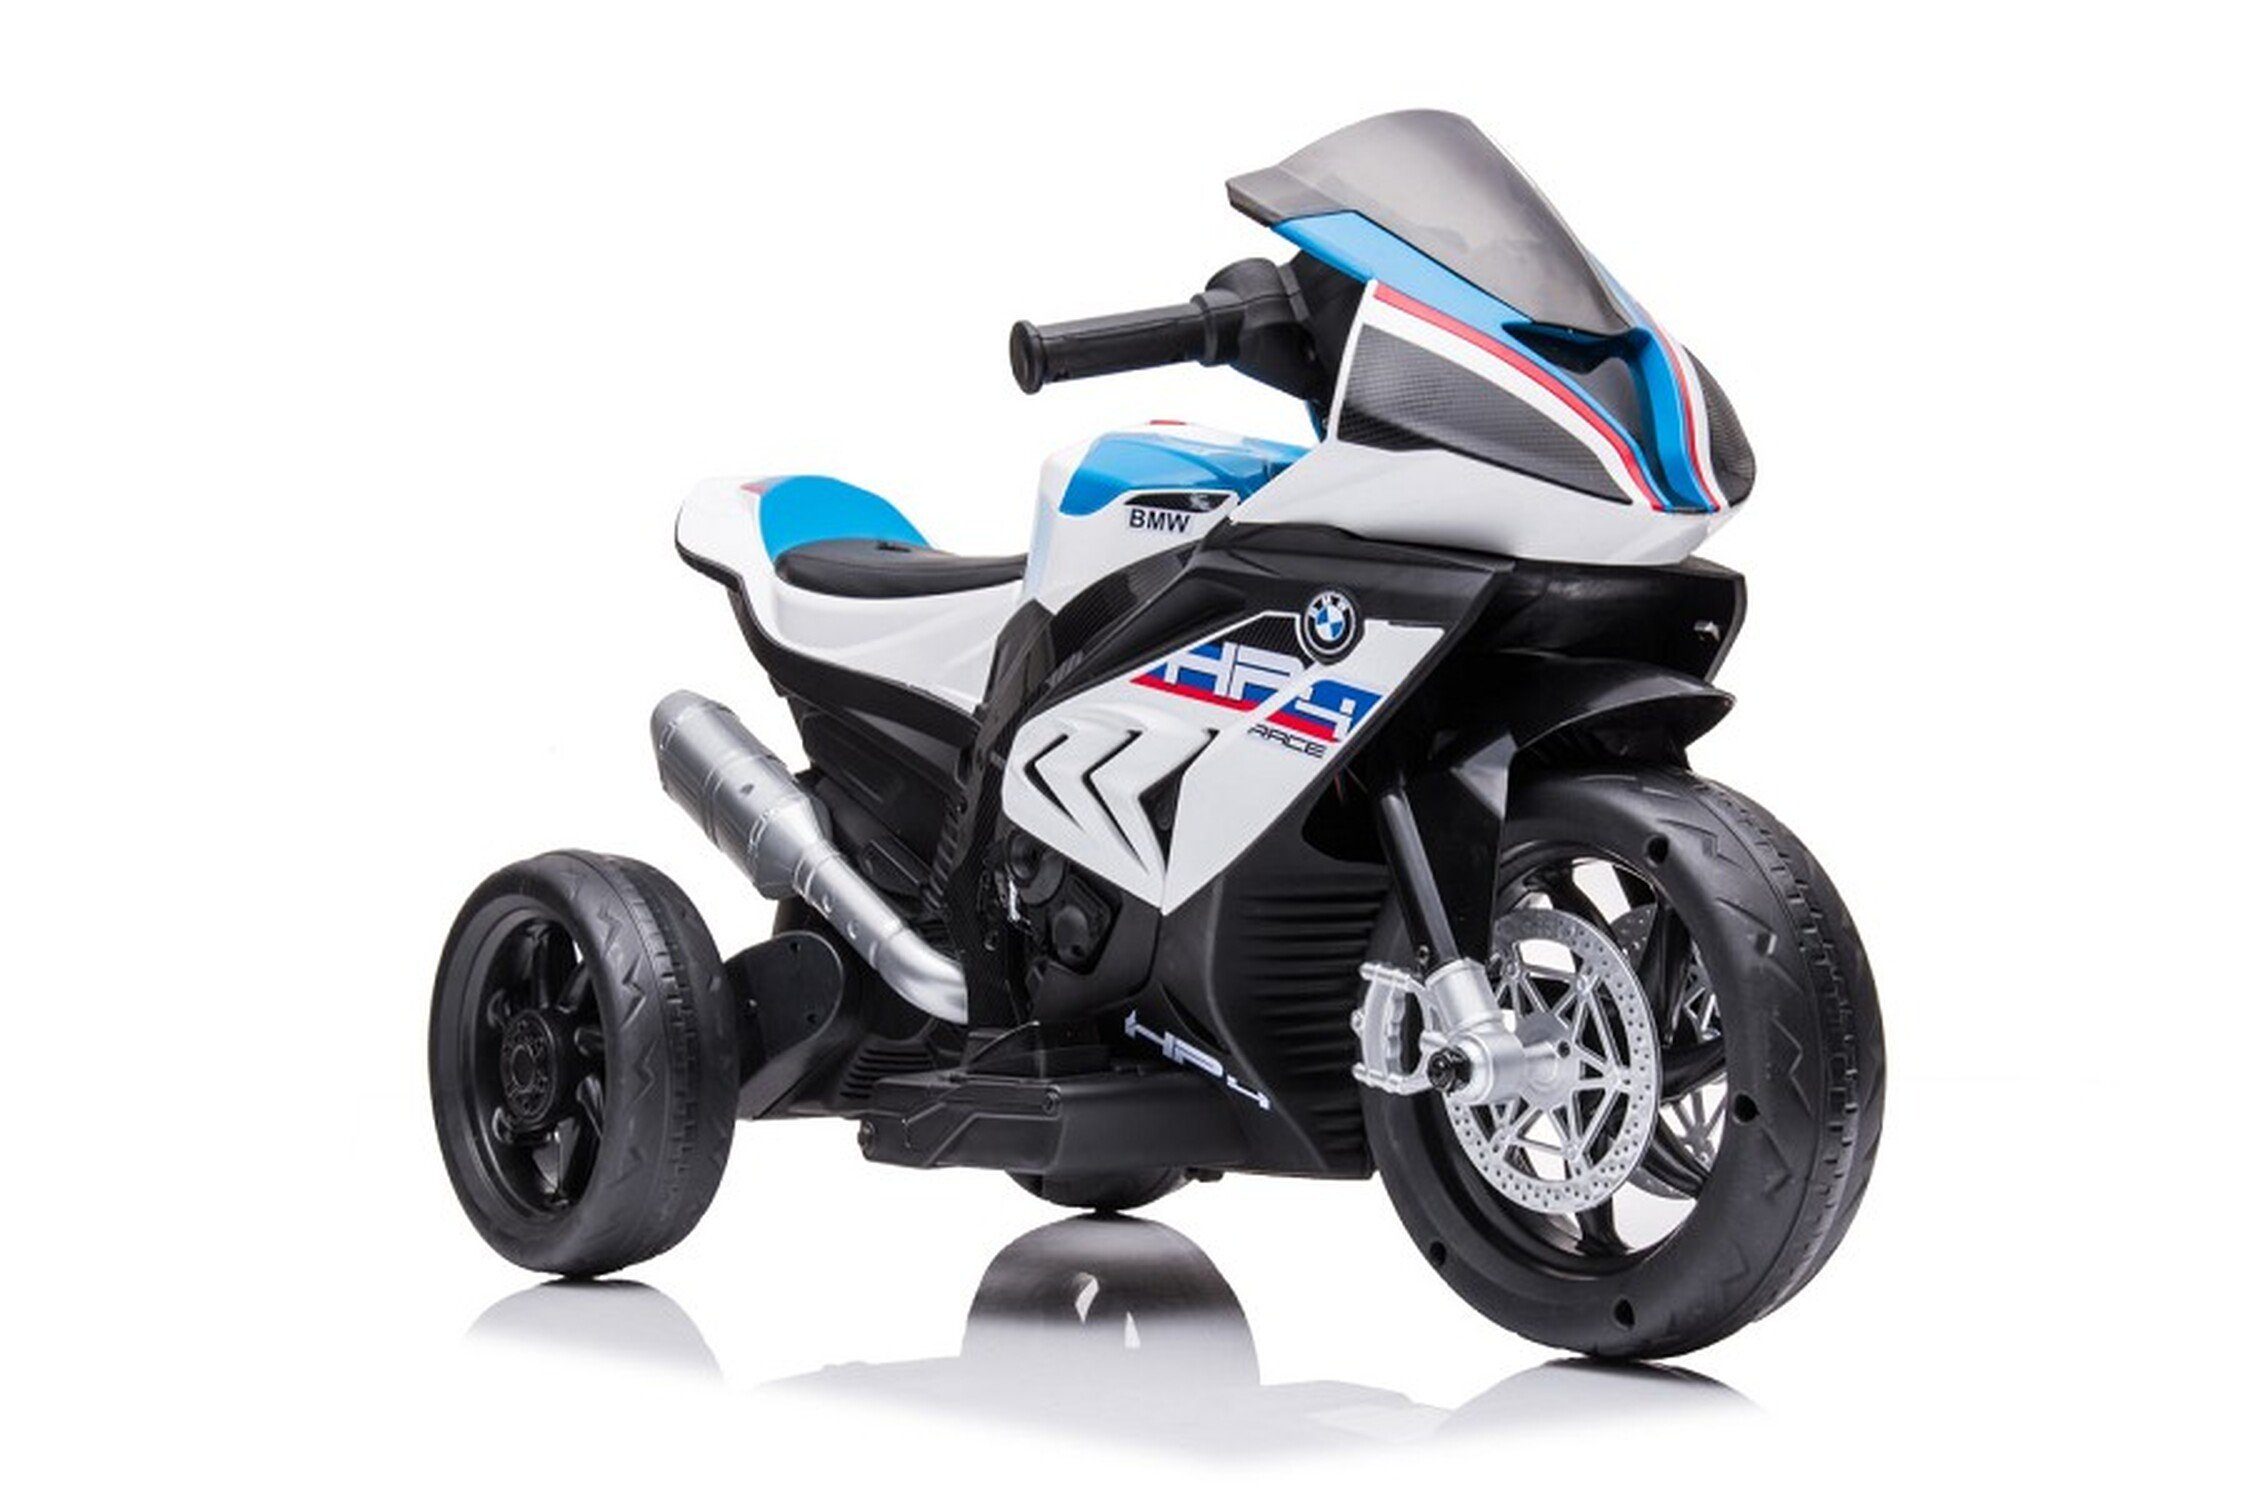 TPFLiving Elektro-Kinderquad eGo-Kart - Motor: 2 x 12 V - Akku: 2